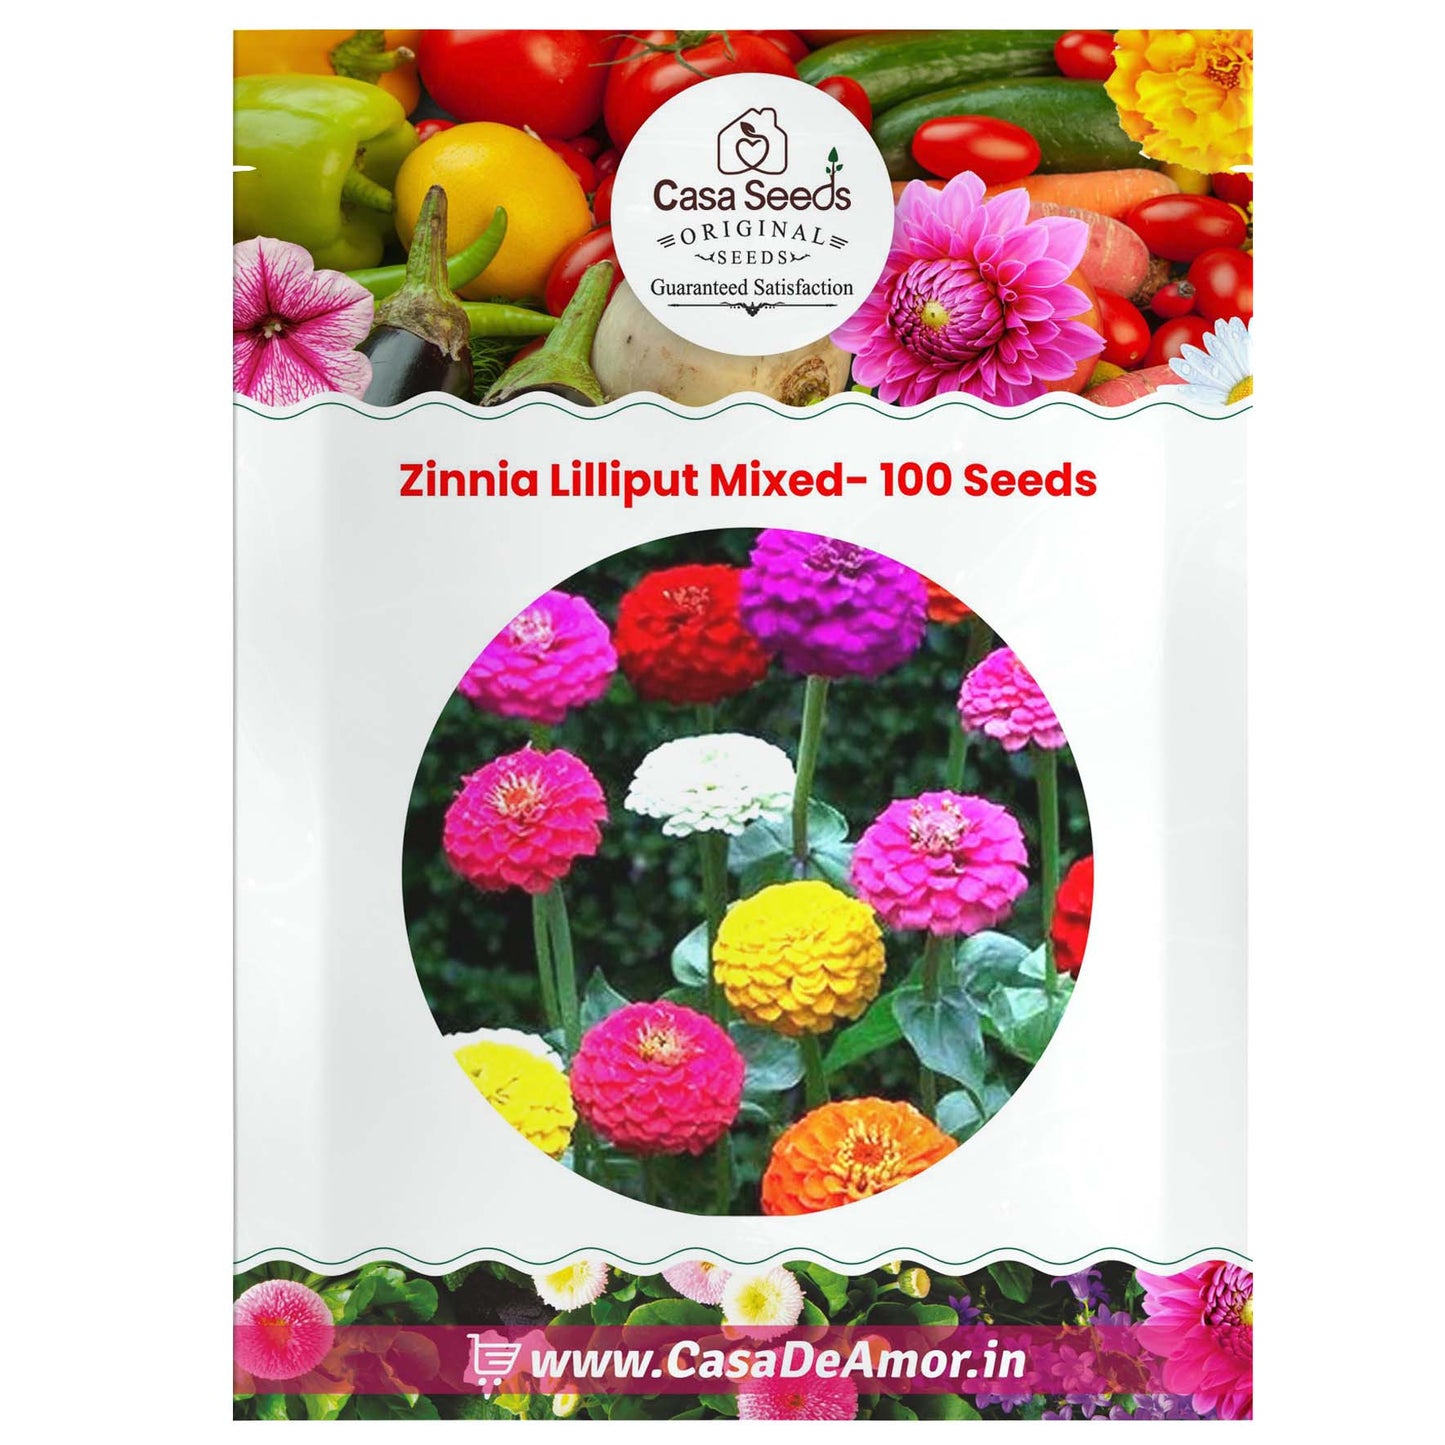 Zinnia Liliput Mixed- 100 Seeds